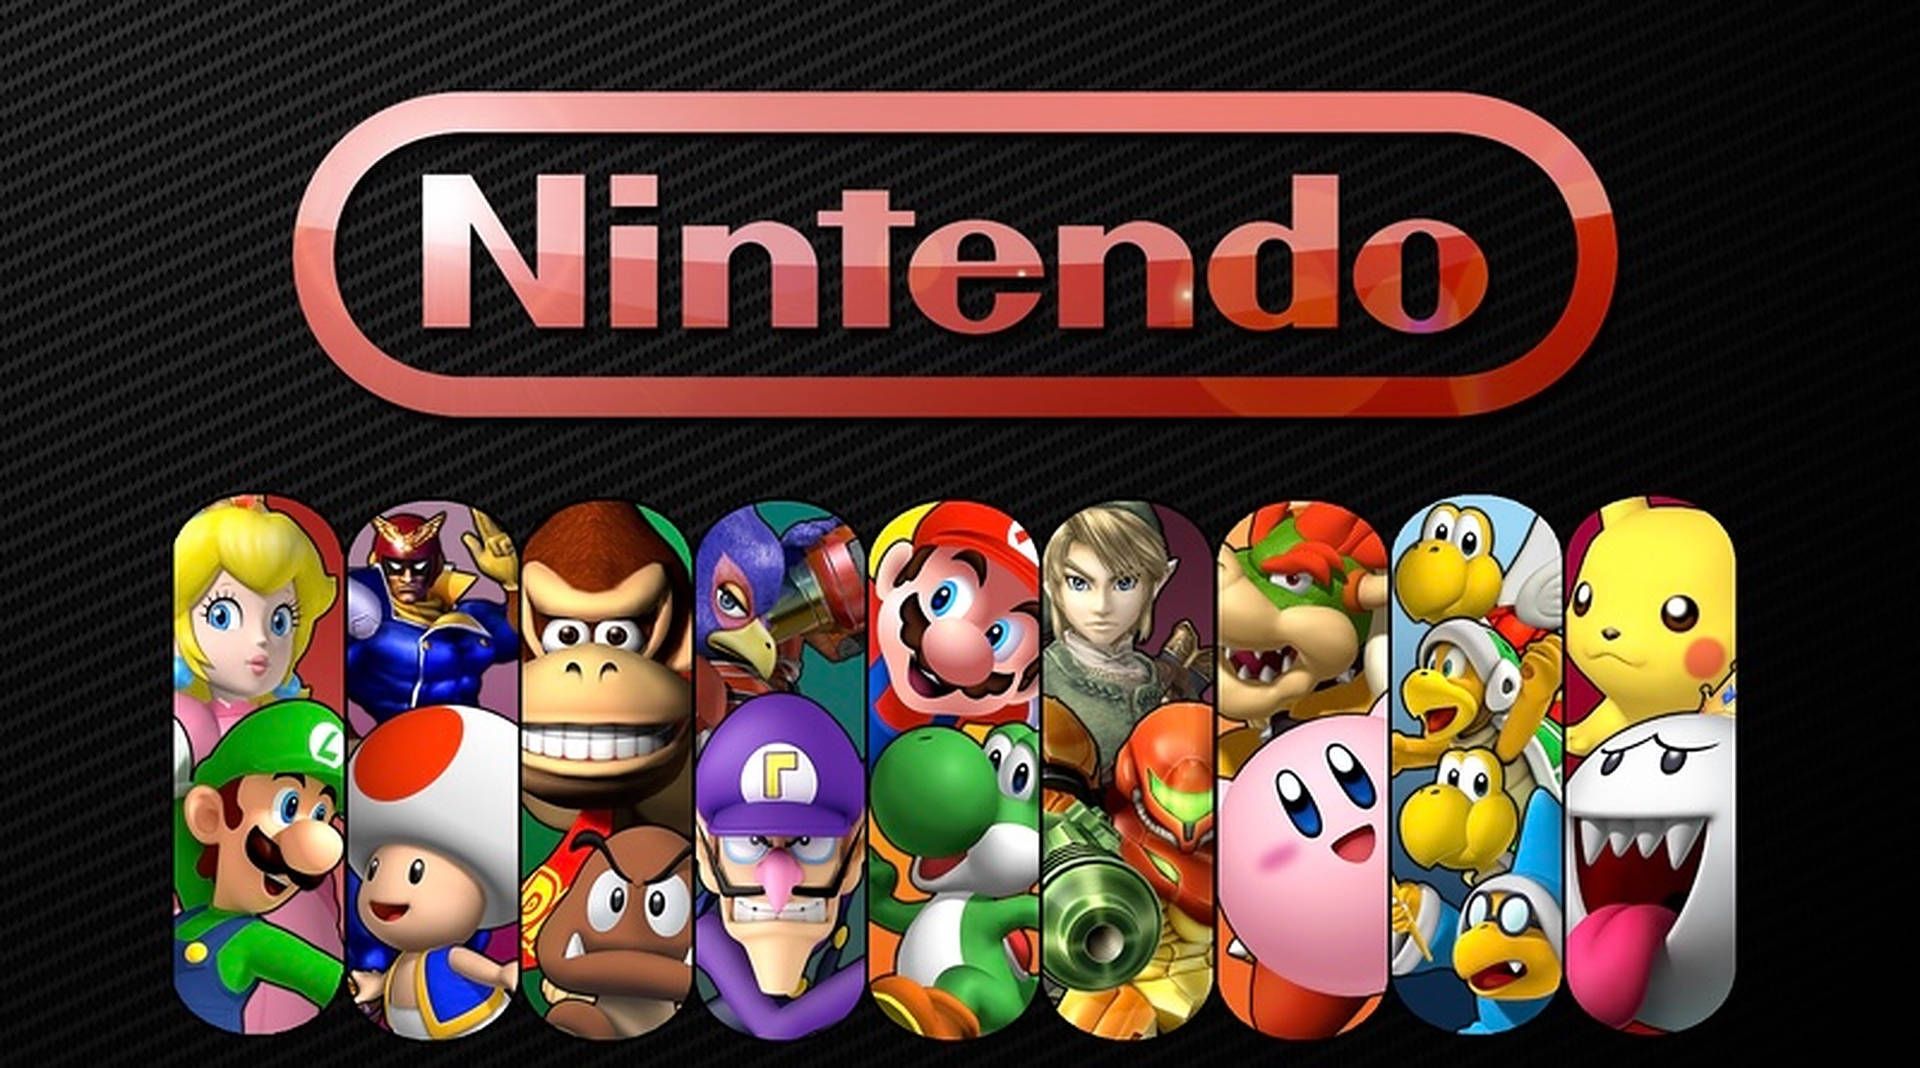 Nintendo characters on a black background - Nintendo